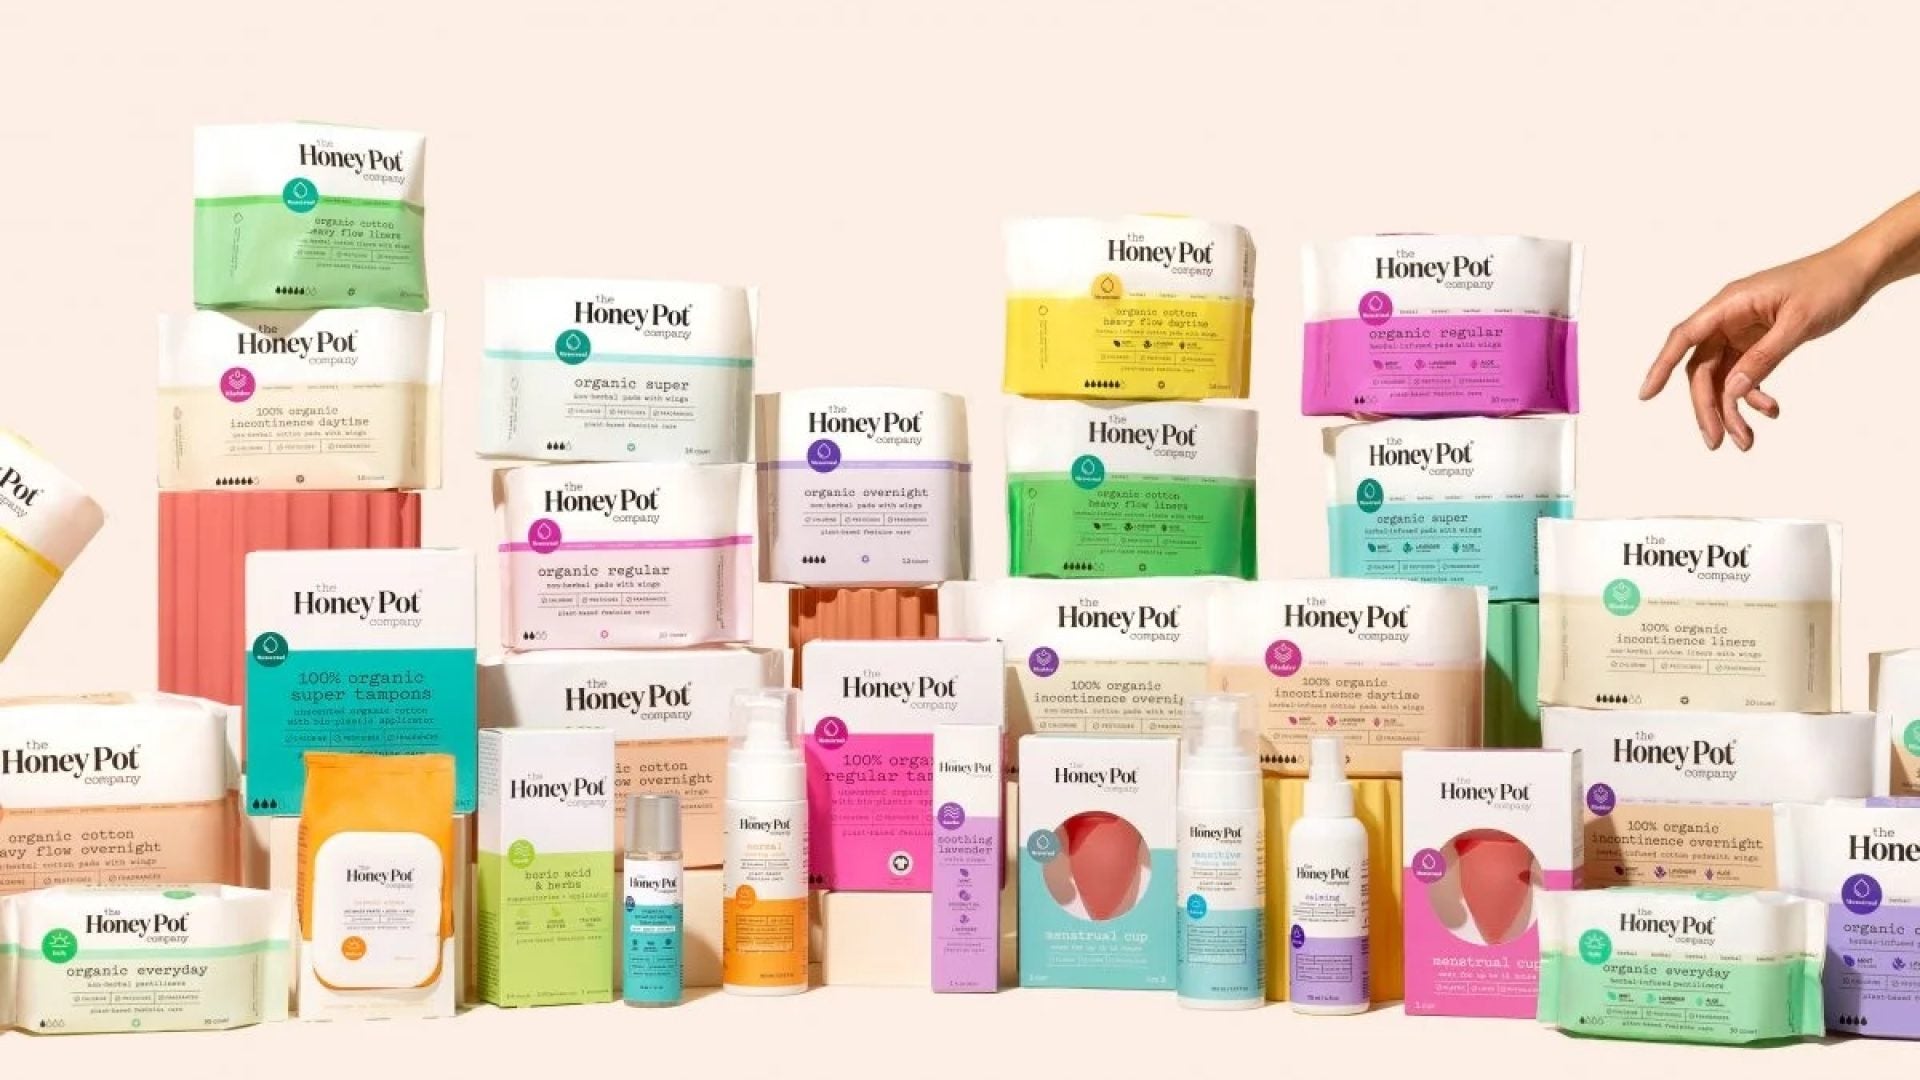 The Honey Pot Founder Shares Emotional Apology After Ingredient Change Sparks Backlash: 'I Would Never Make Harmful Products'